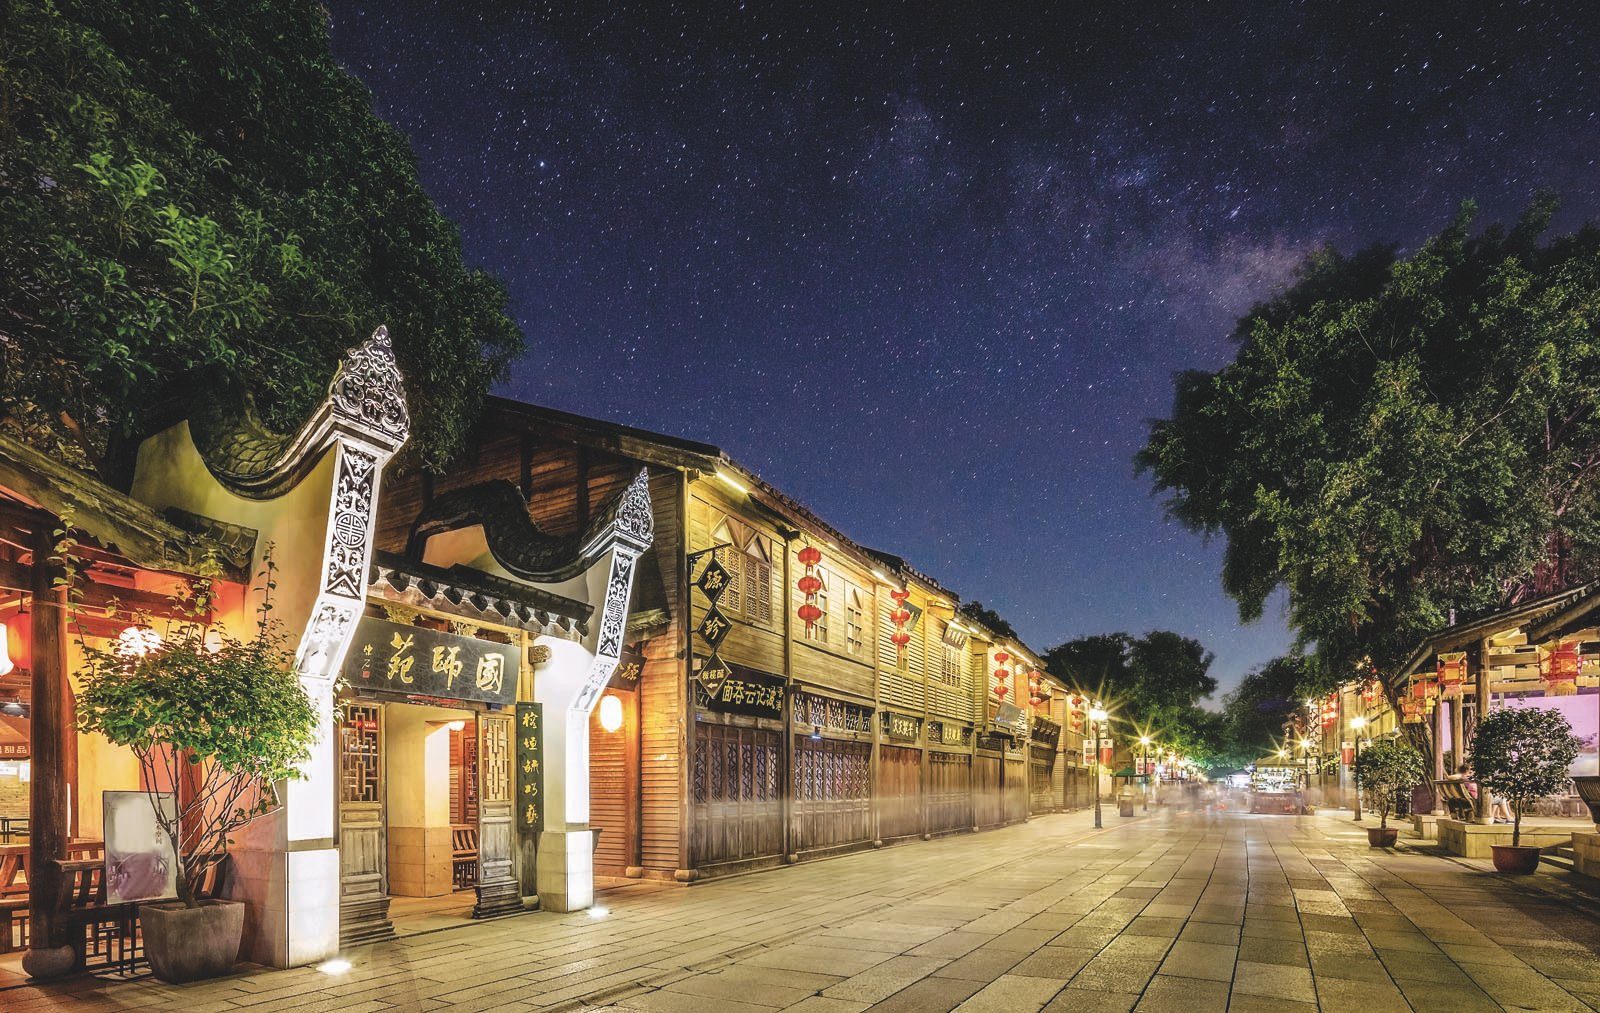 Fuzhou old town street night view